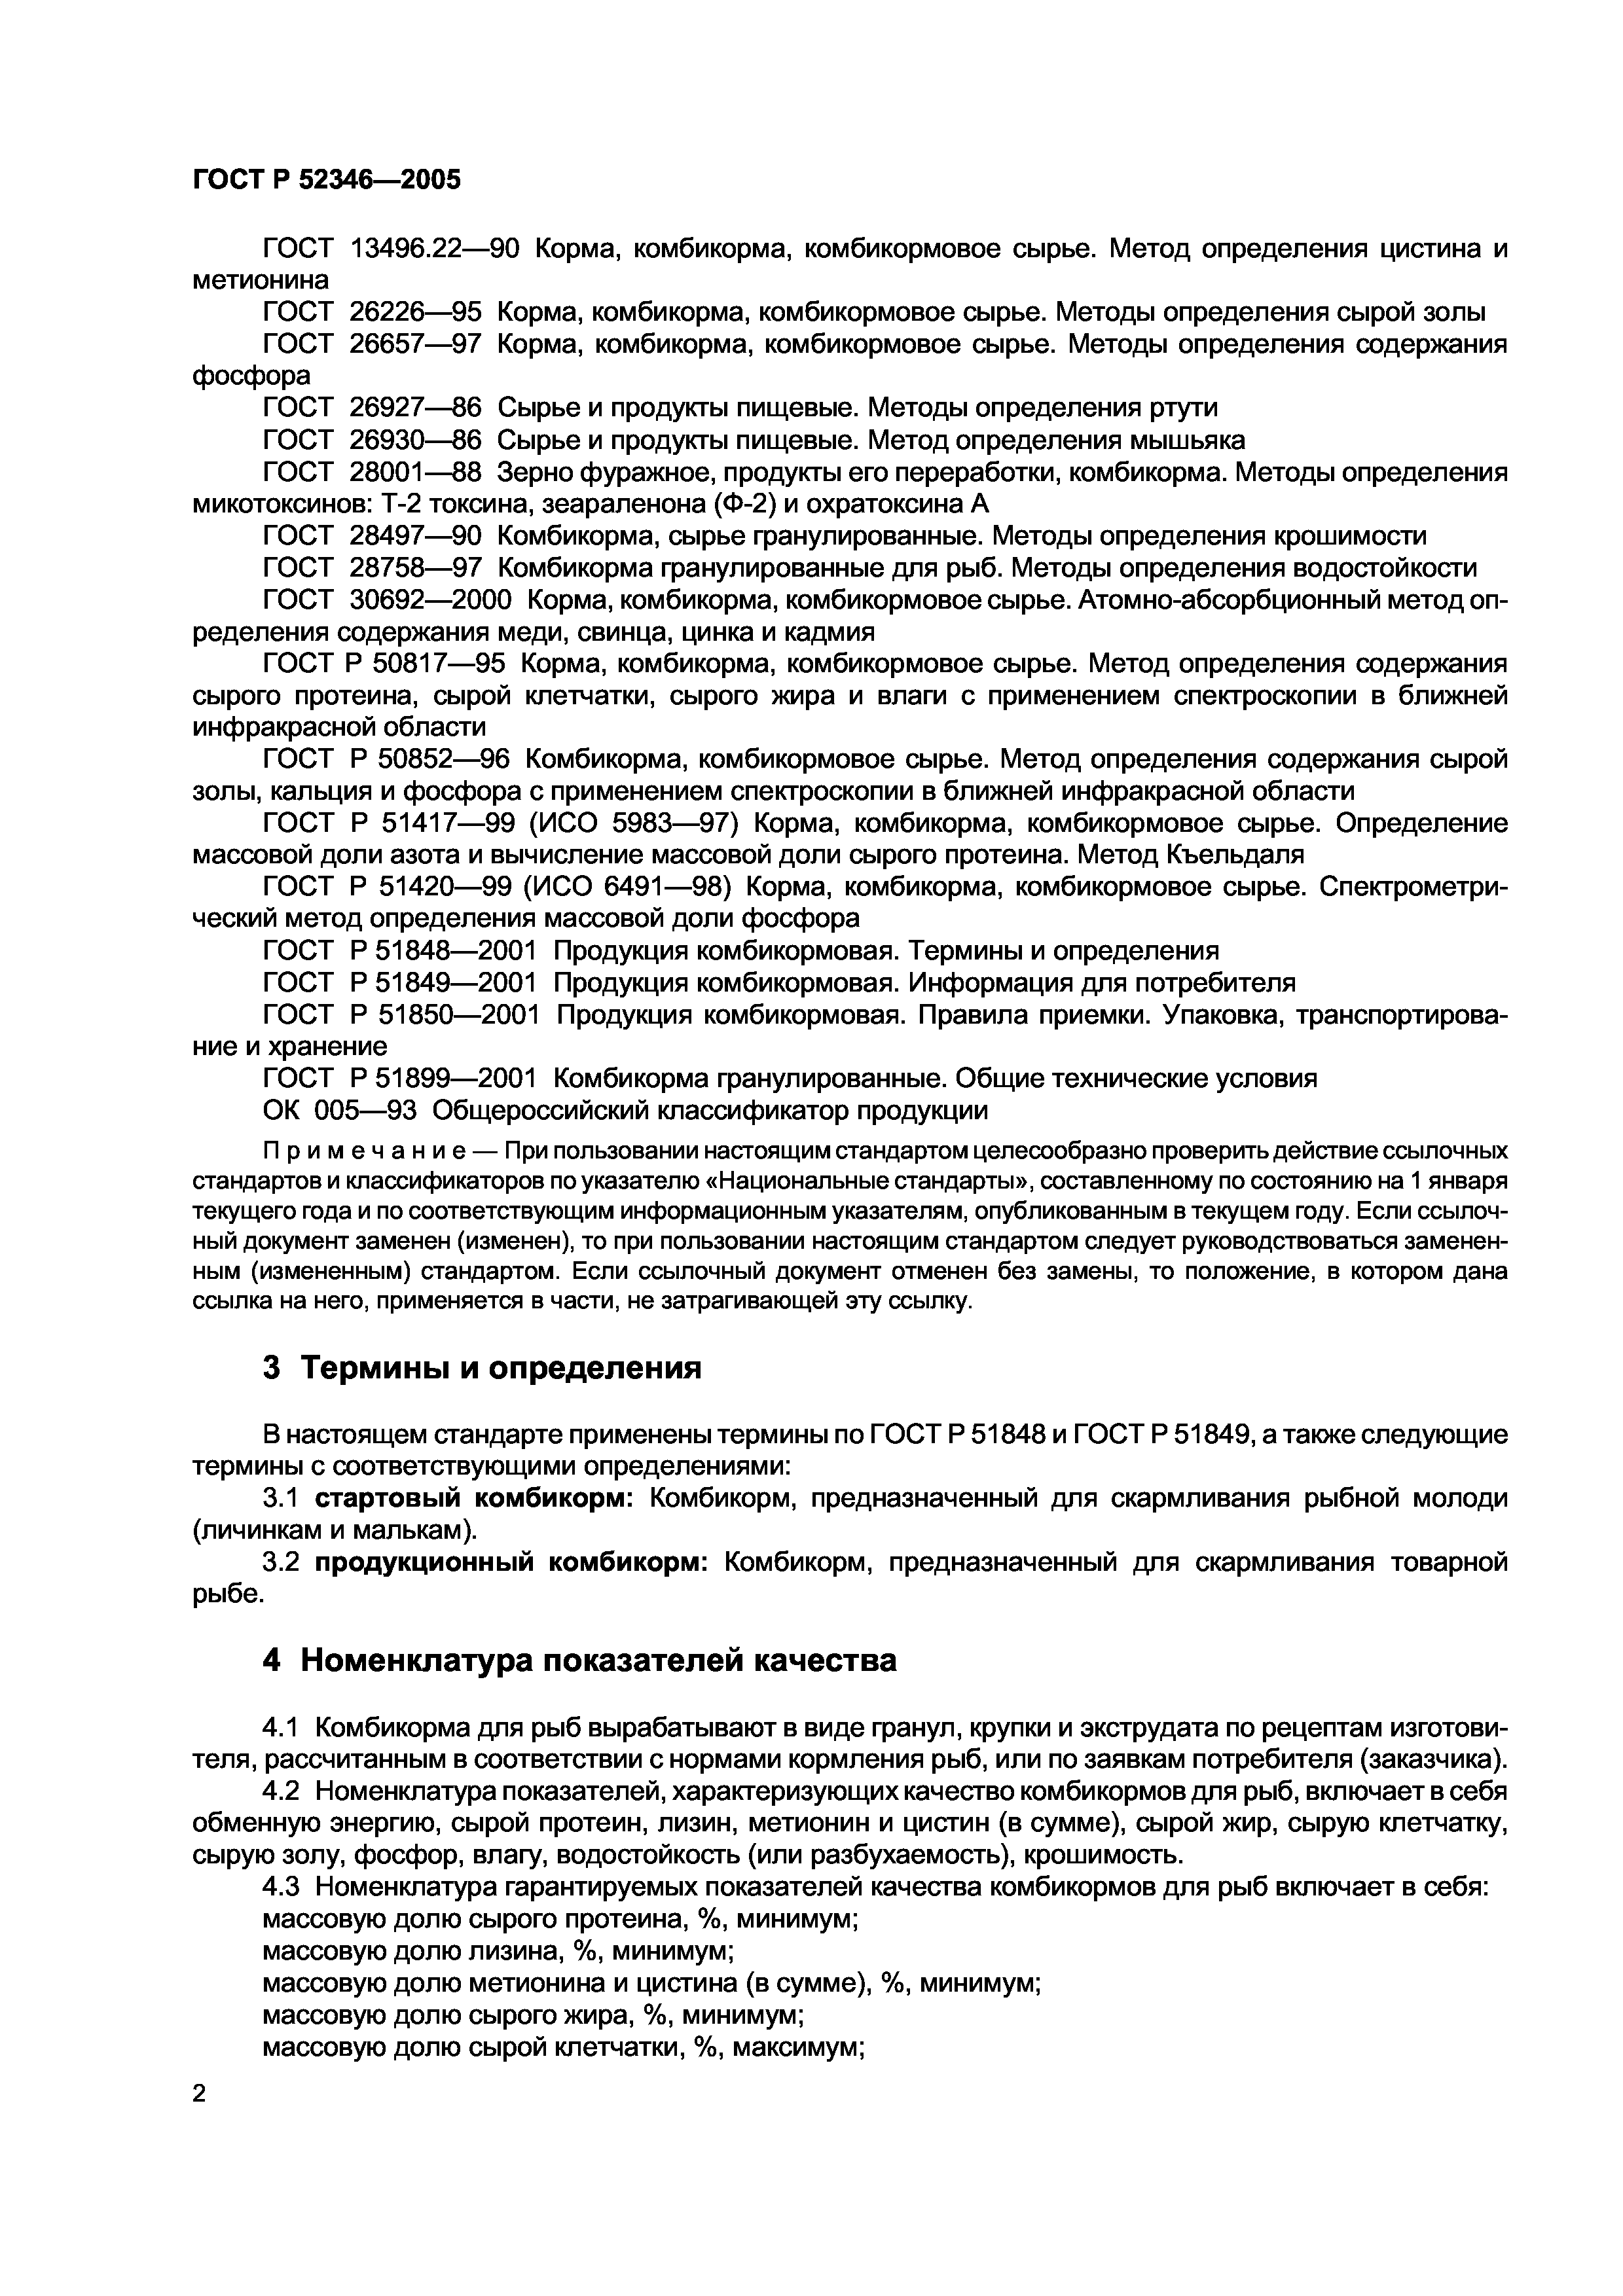 ГОСТ Р 52346-2005